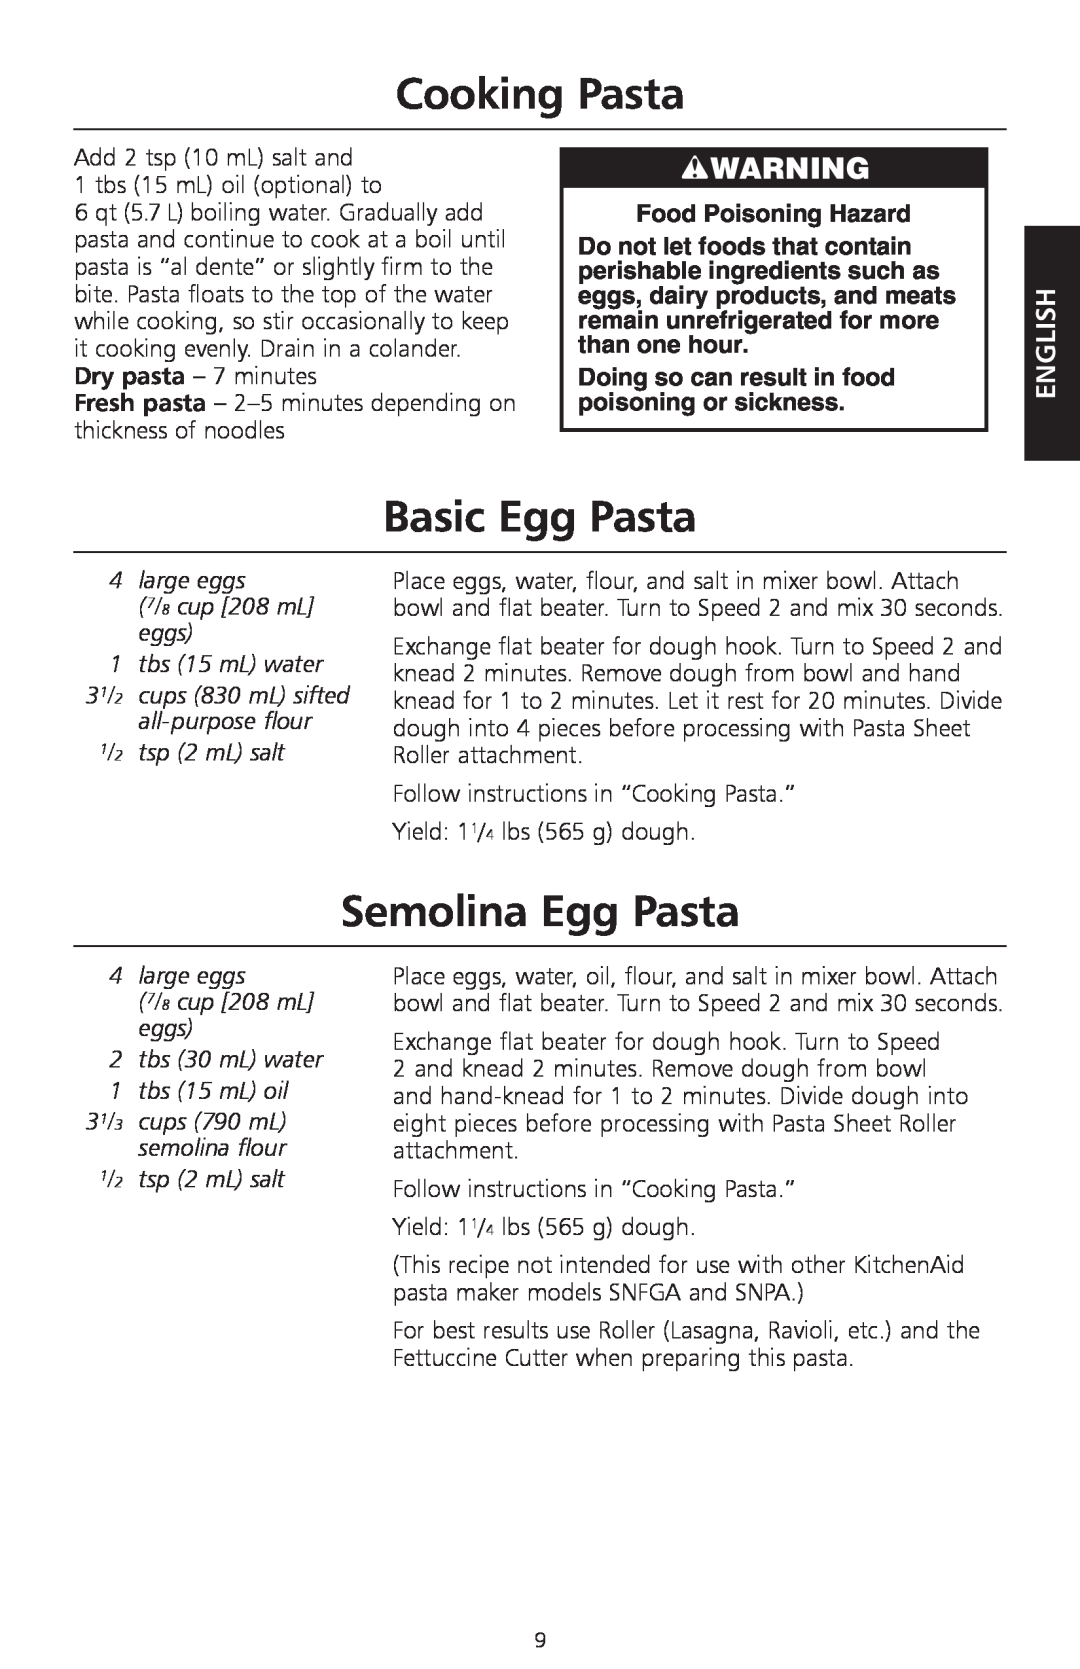 KitchenAid KPEX manual Cooking Pasta, Basic Egg Pasta, Semolina Egg Pasta, large eggs 7/8 cup 208 mL eggs 1 tbs 15 mL water 